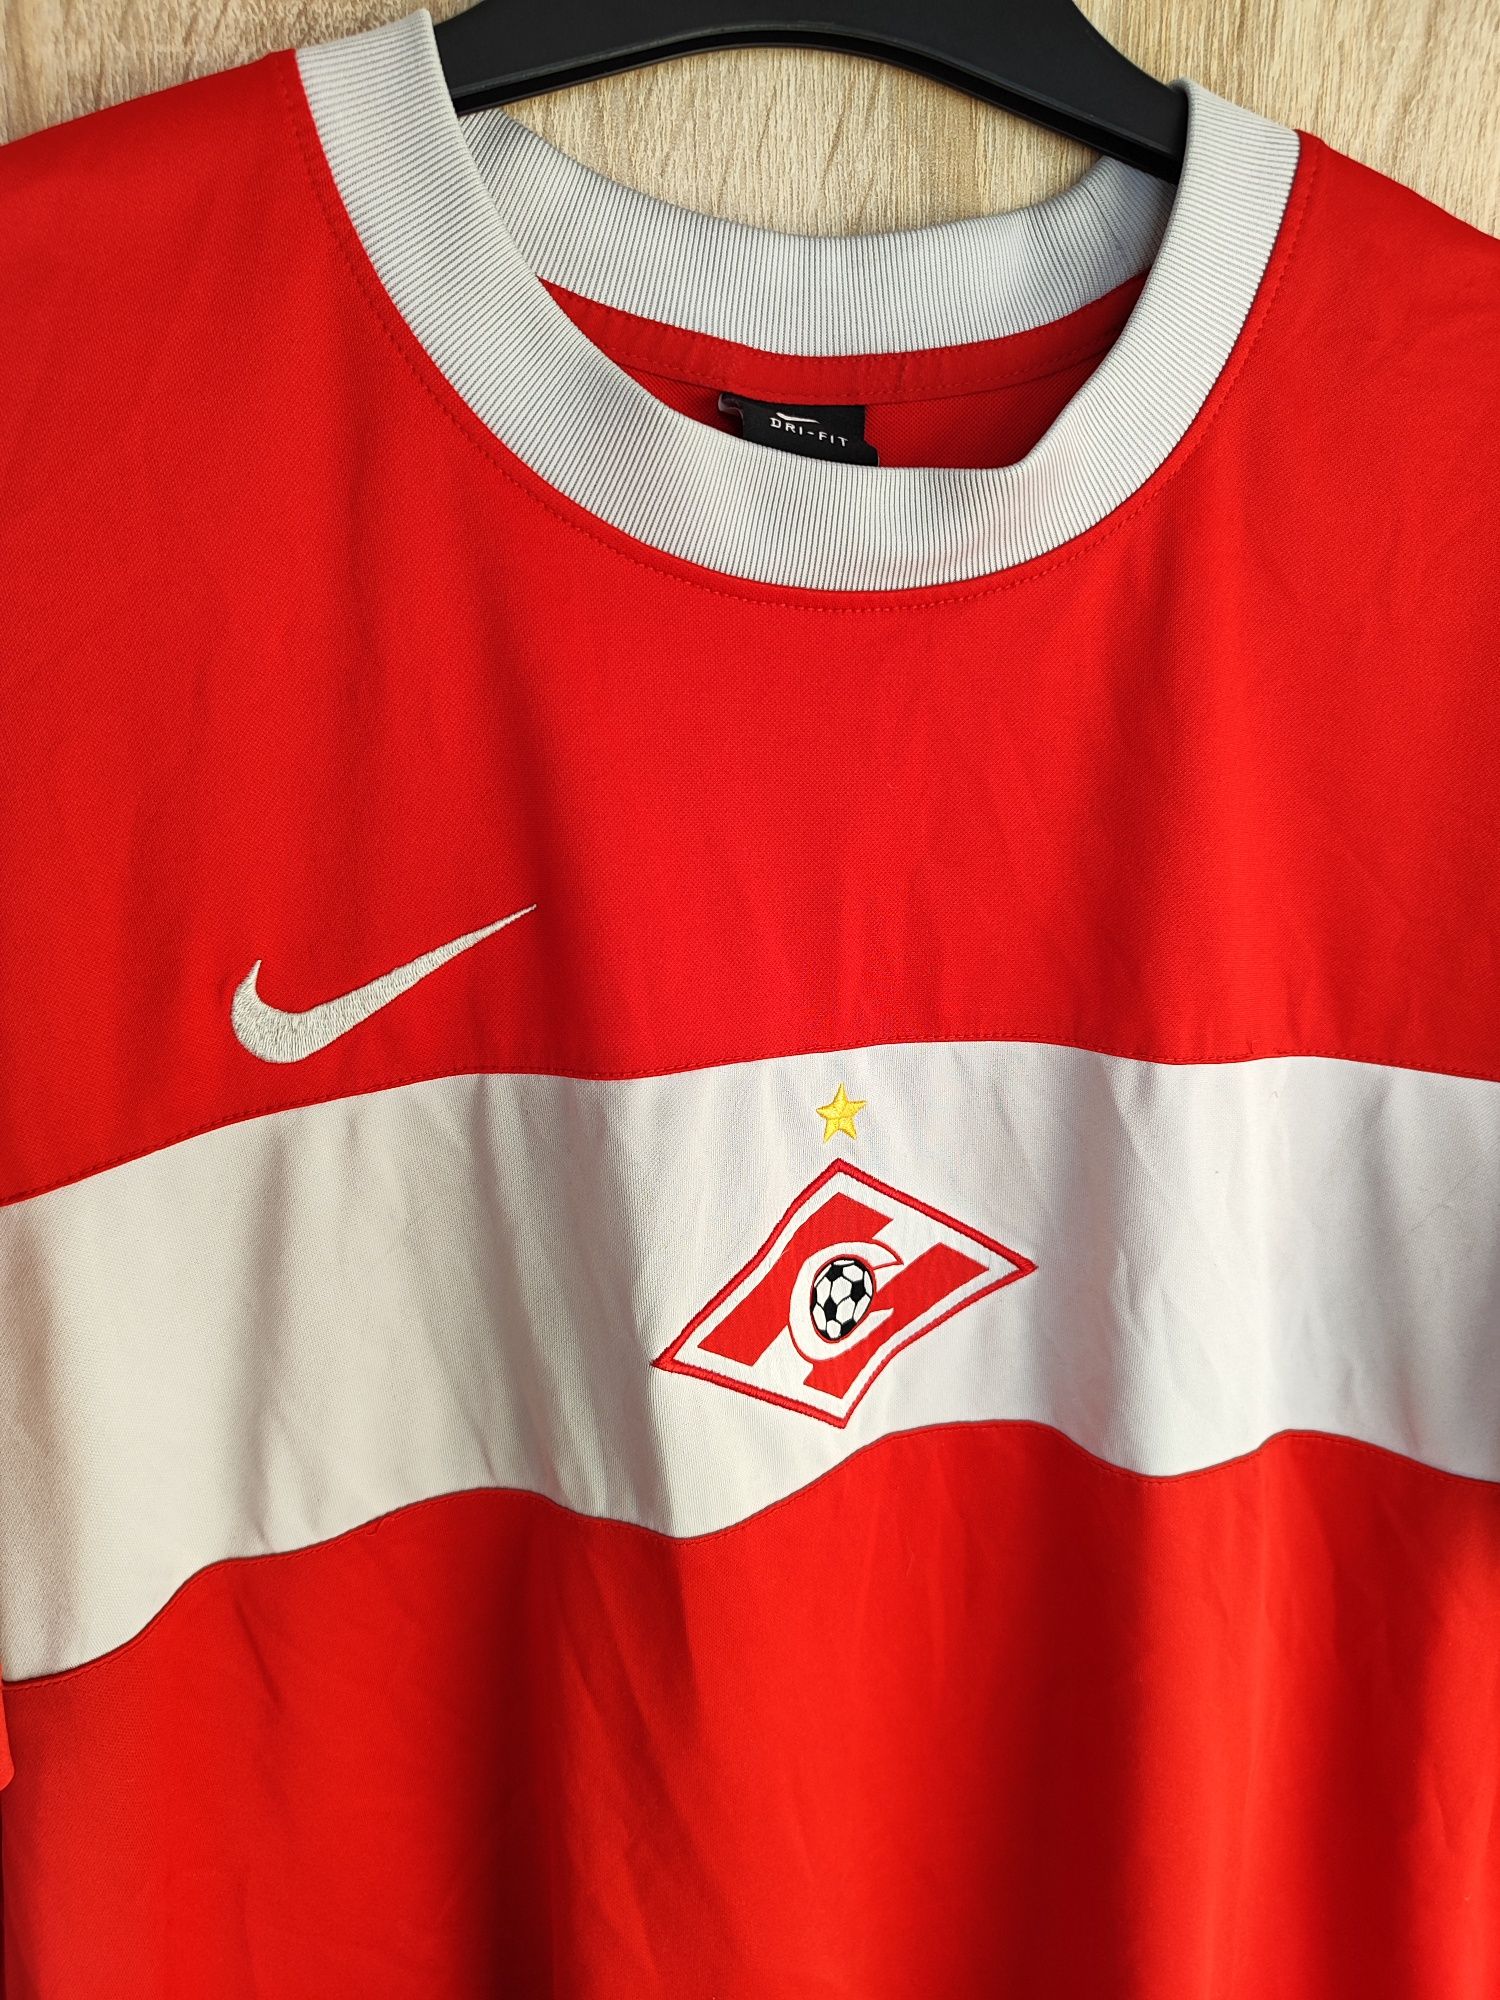 Koszulka piłkarska męska Nike Spartak Moskwa 2011/12 rozmiar XL